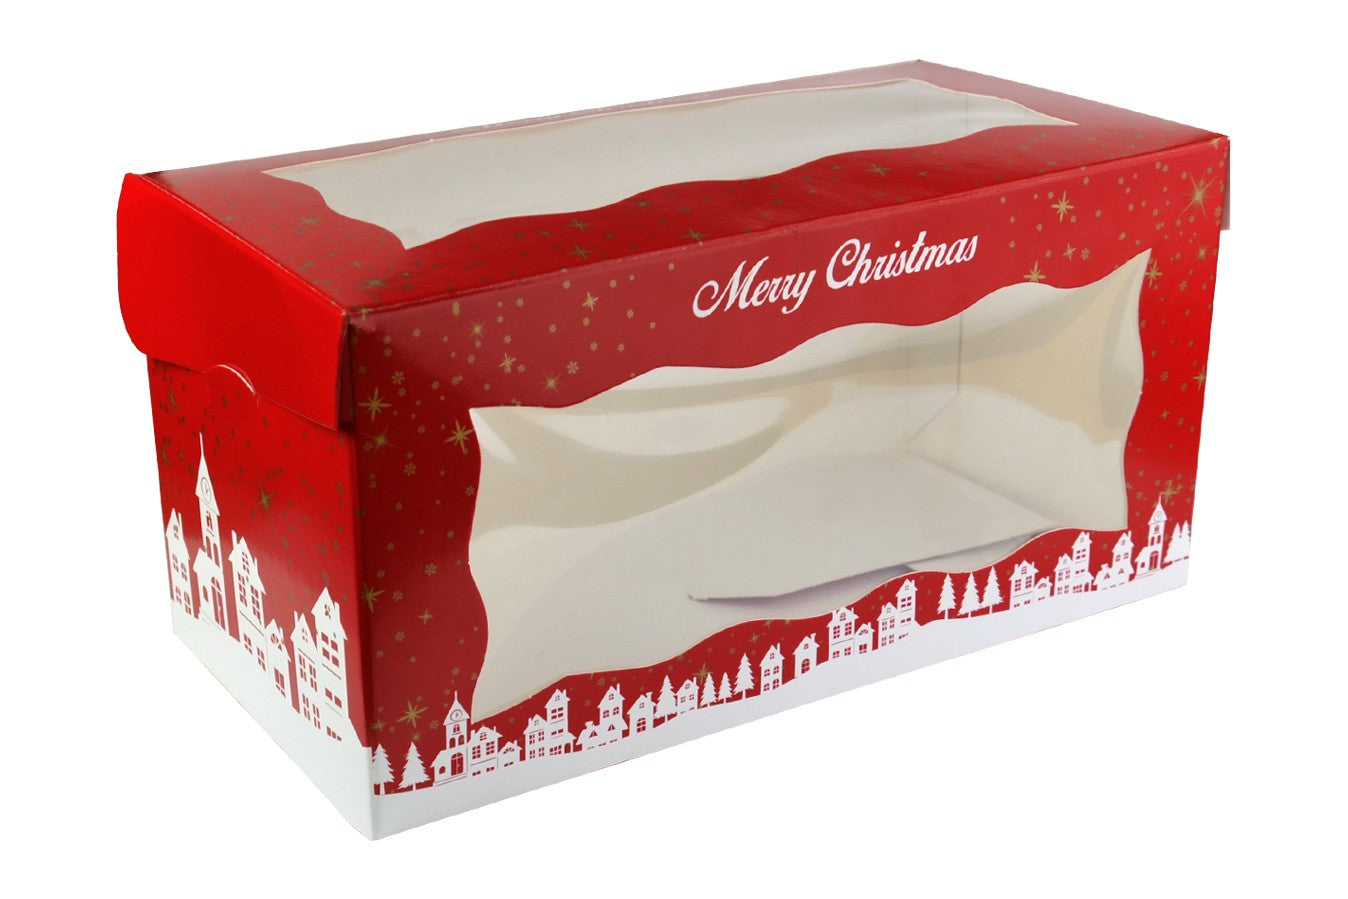 Merry Christmas Red Yule Log Cake Box - 4 x 8 - The Cooks Cupboard Ltd